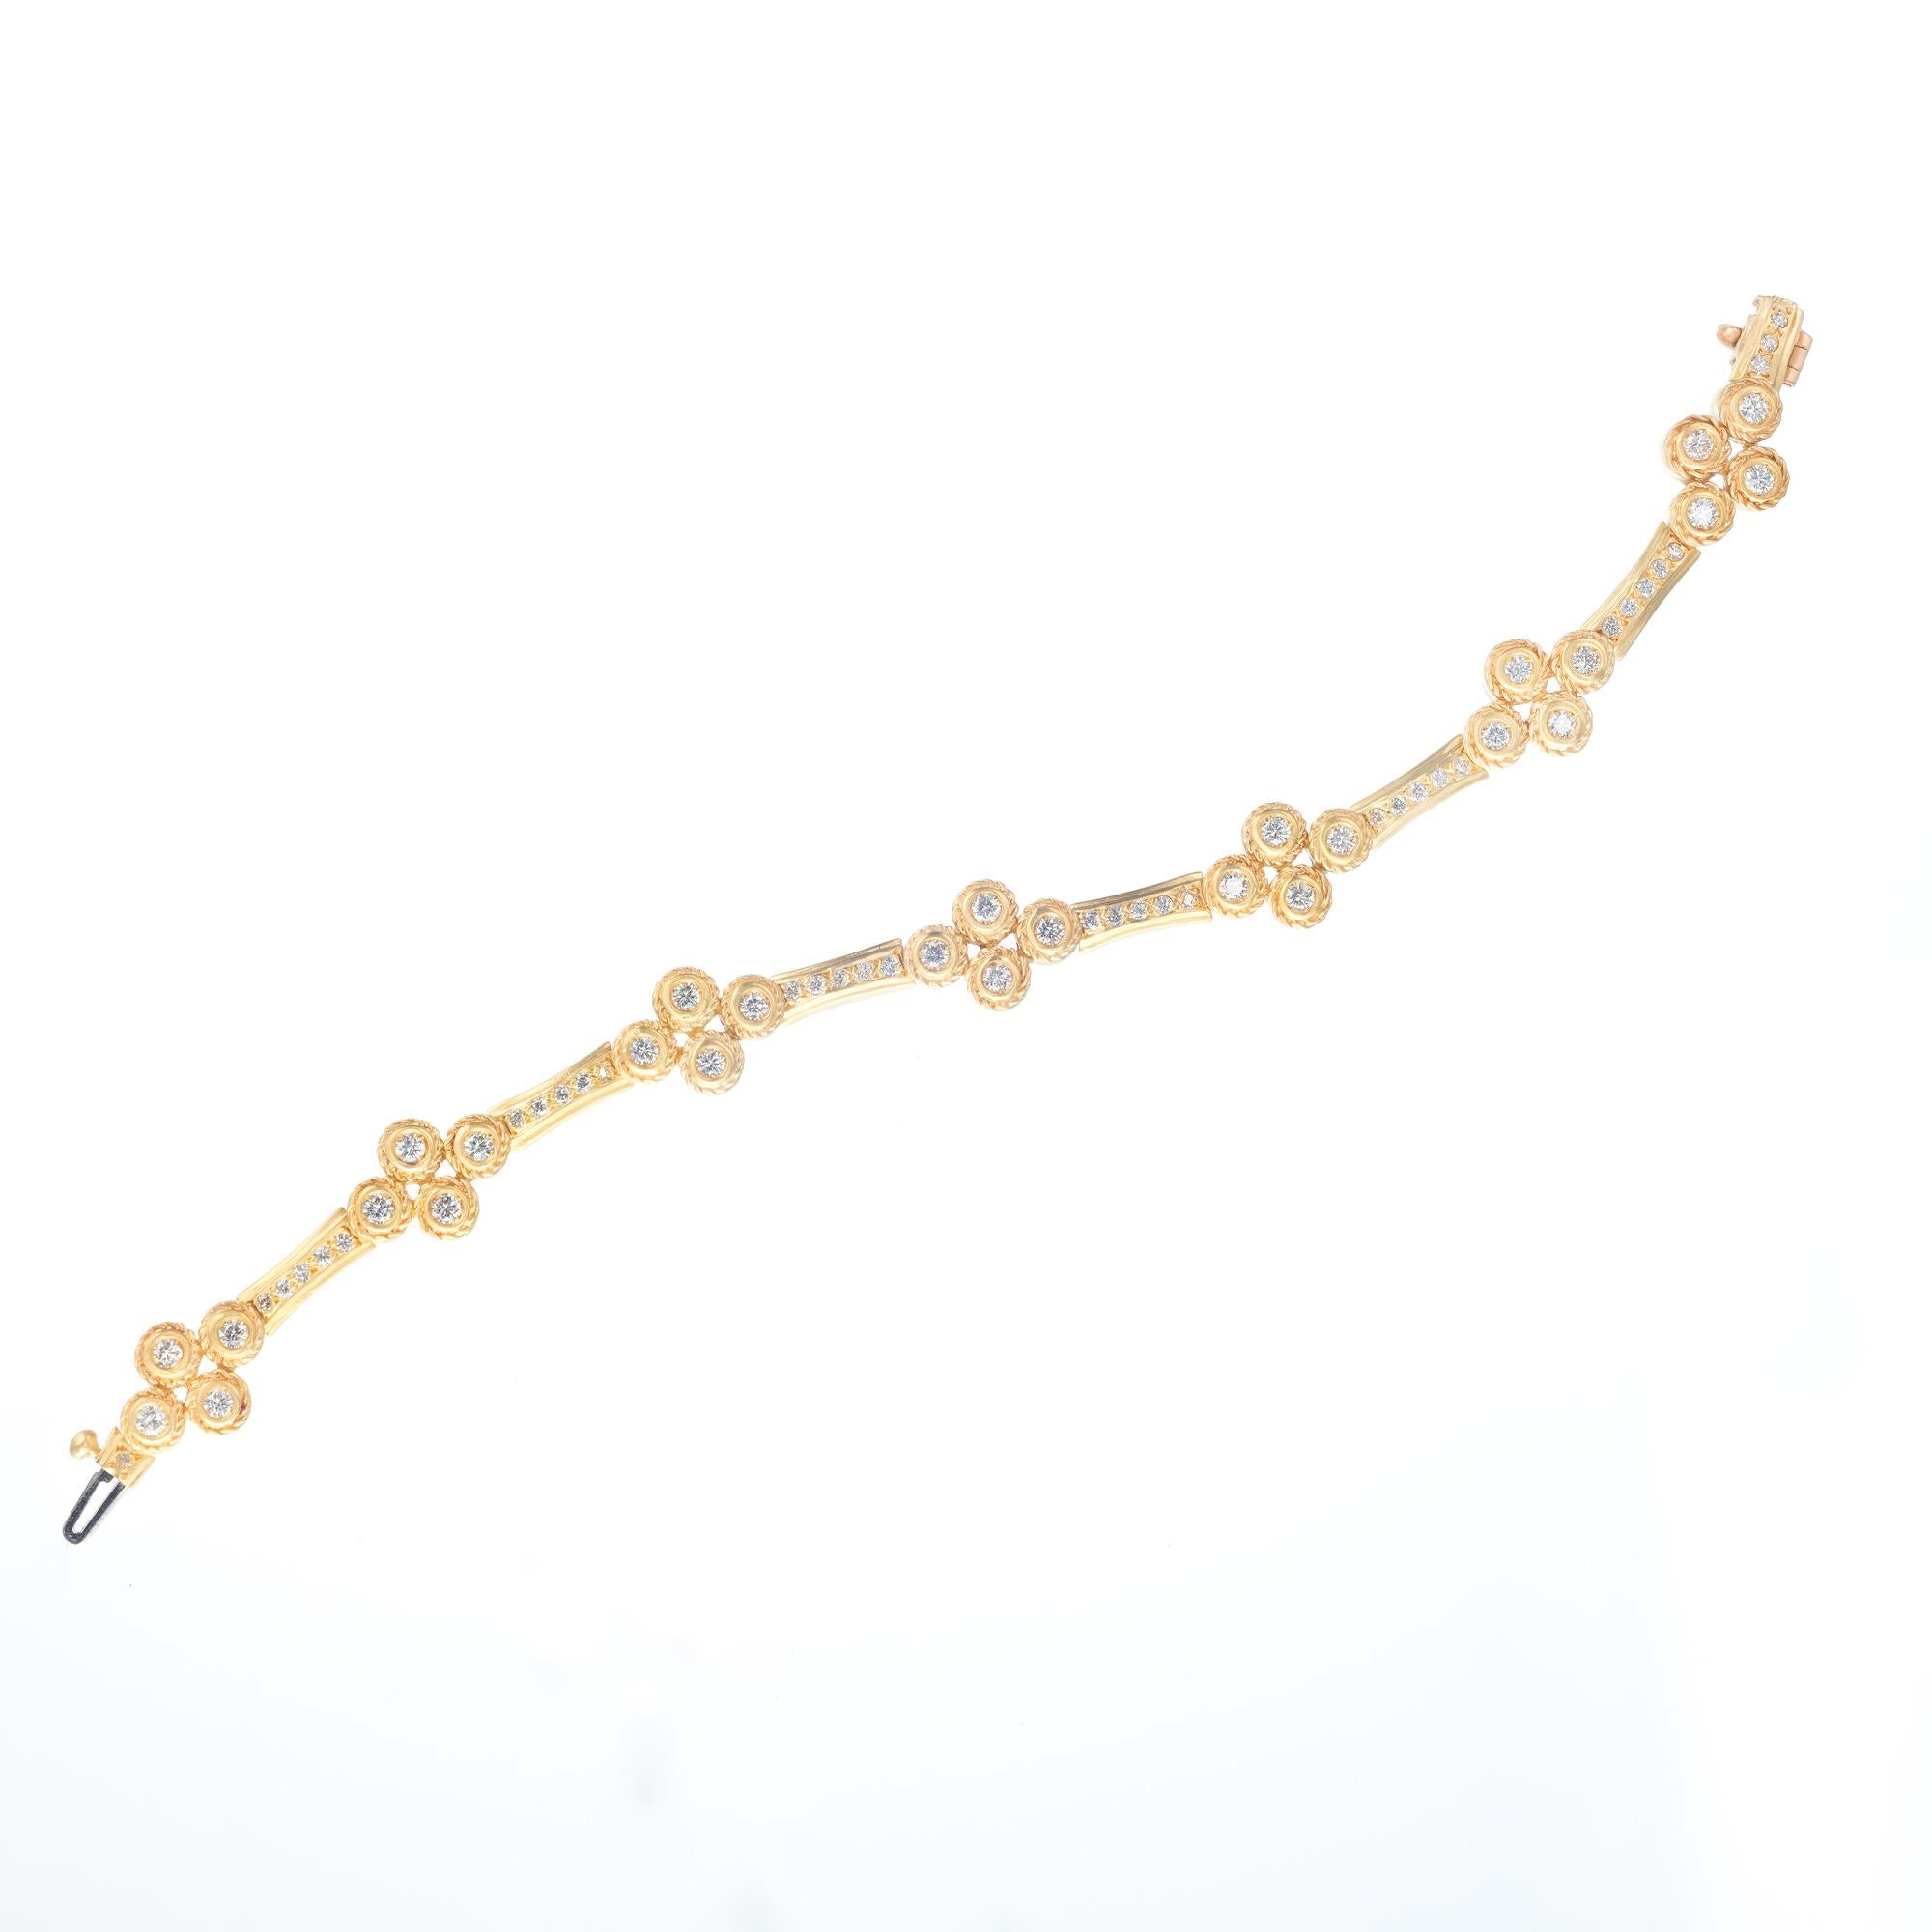 Doris Panos 18k yellow gold diamond flower motif bracelet. Soft texture finish, sparkly full cut diamonds. Built in safety catch. 

62 round brilliant cut G VS diamonds, Approximate 1.40cts 
18k yellow gold
Stamped: 18k
Hallmark: DP C2000
37